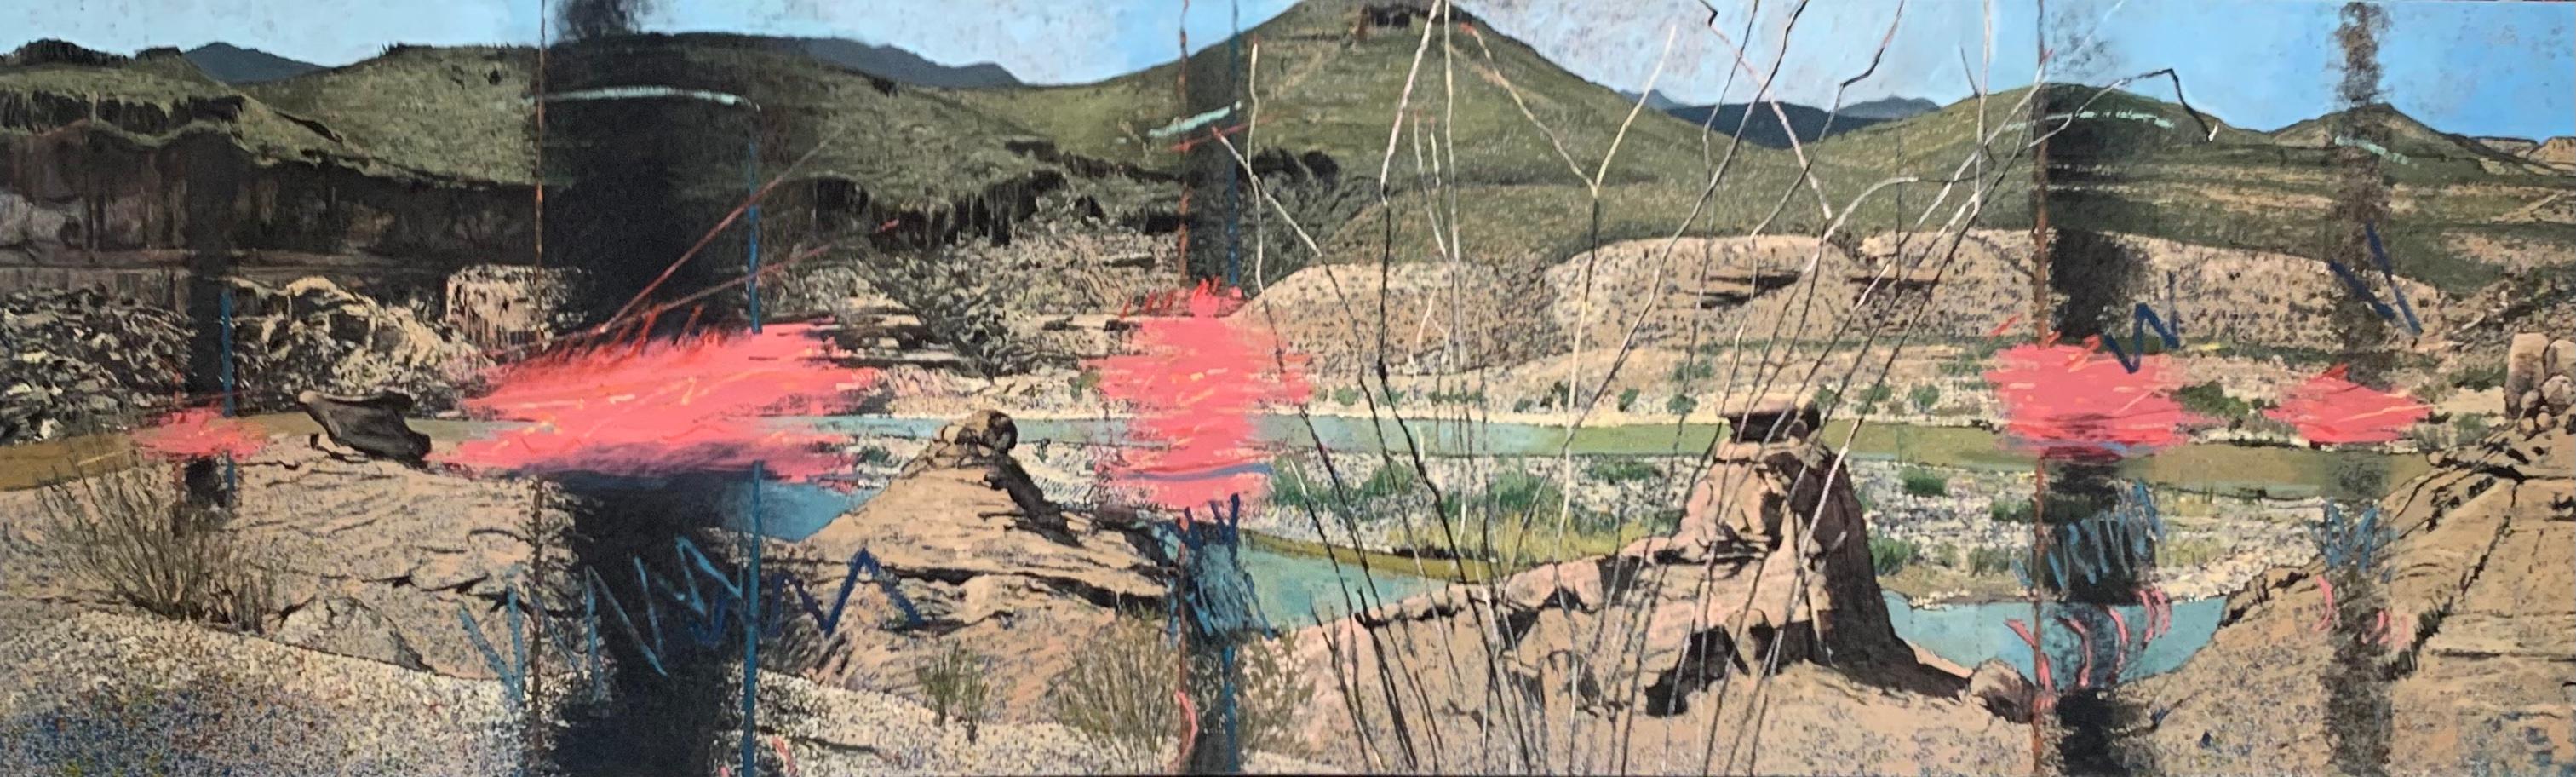 Jim Woodson Landscape Painting - Abstract Landscape Oil Painting